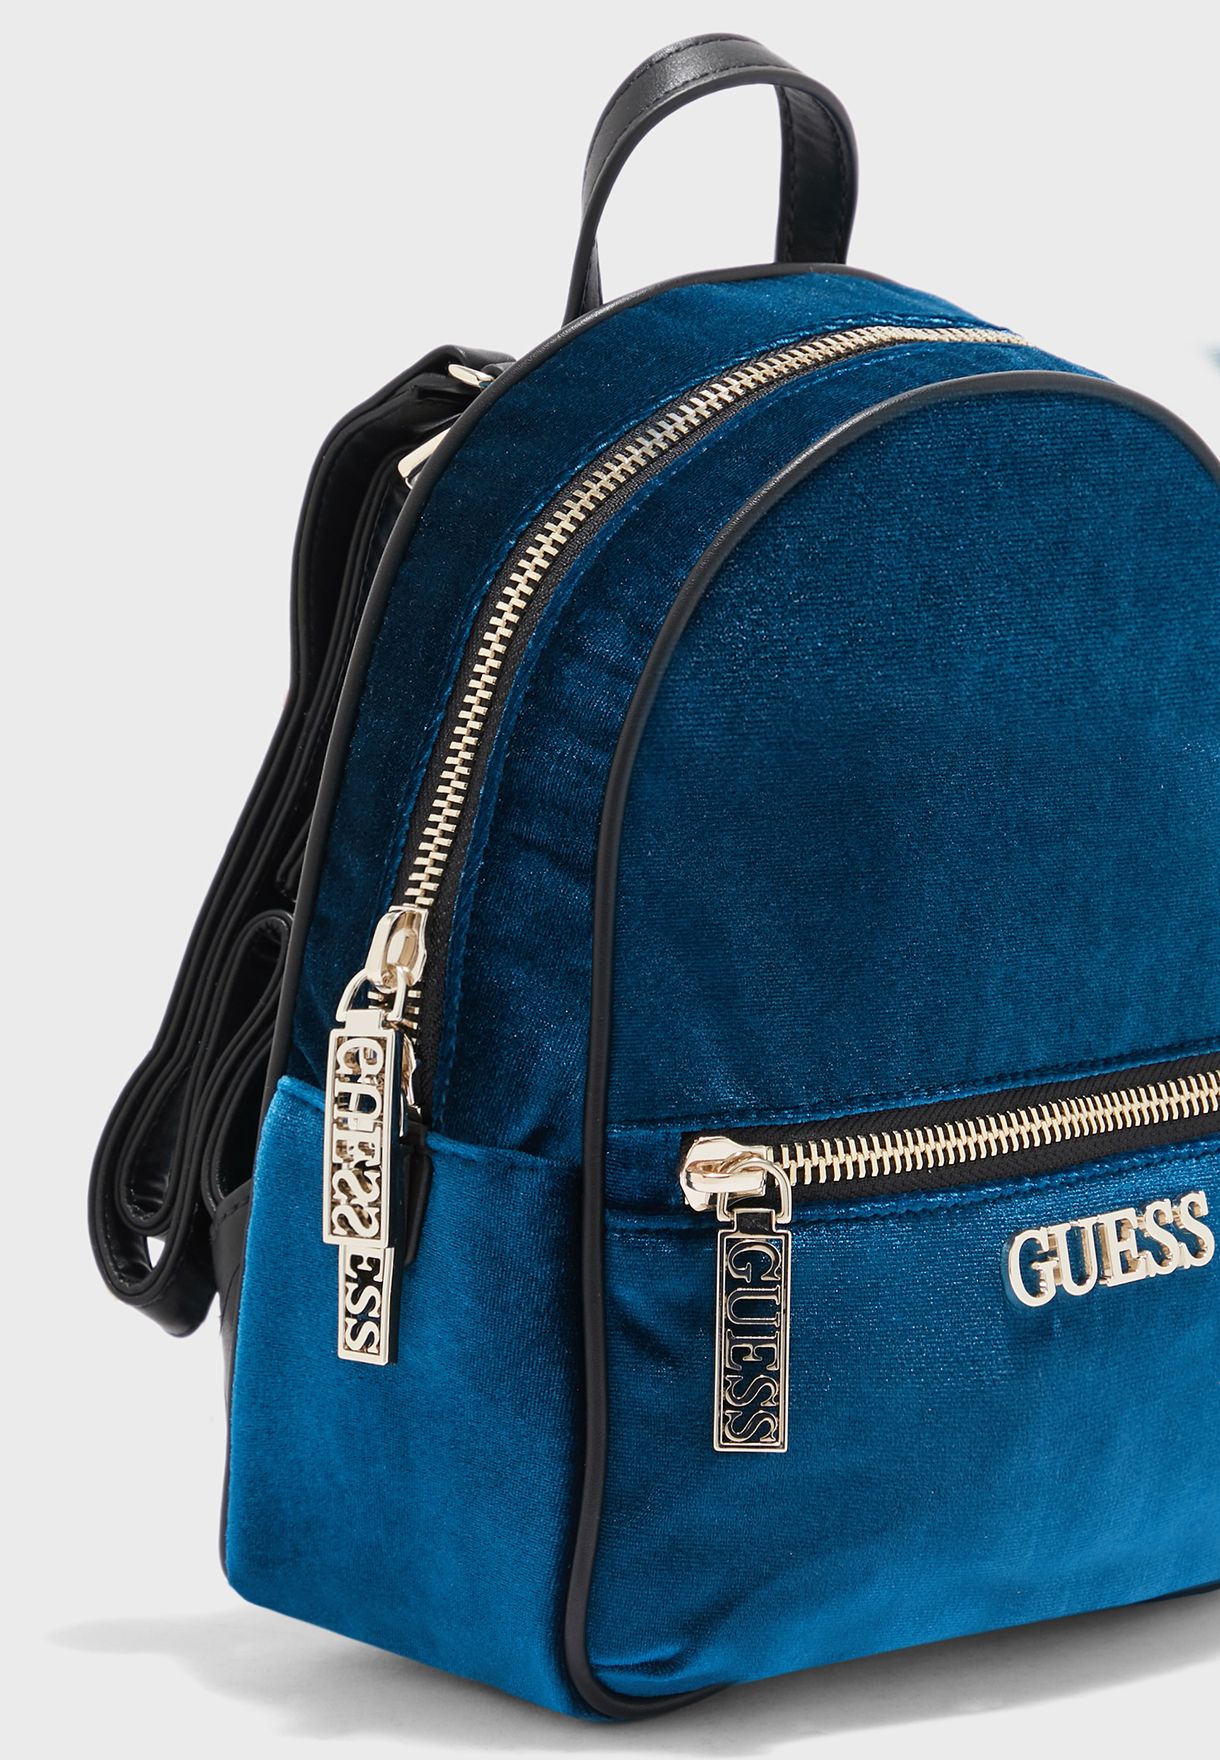 عملية الشراء باري شكل  Buy Guess blue Ronnie Backpack for Women in MENA, Worldwide